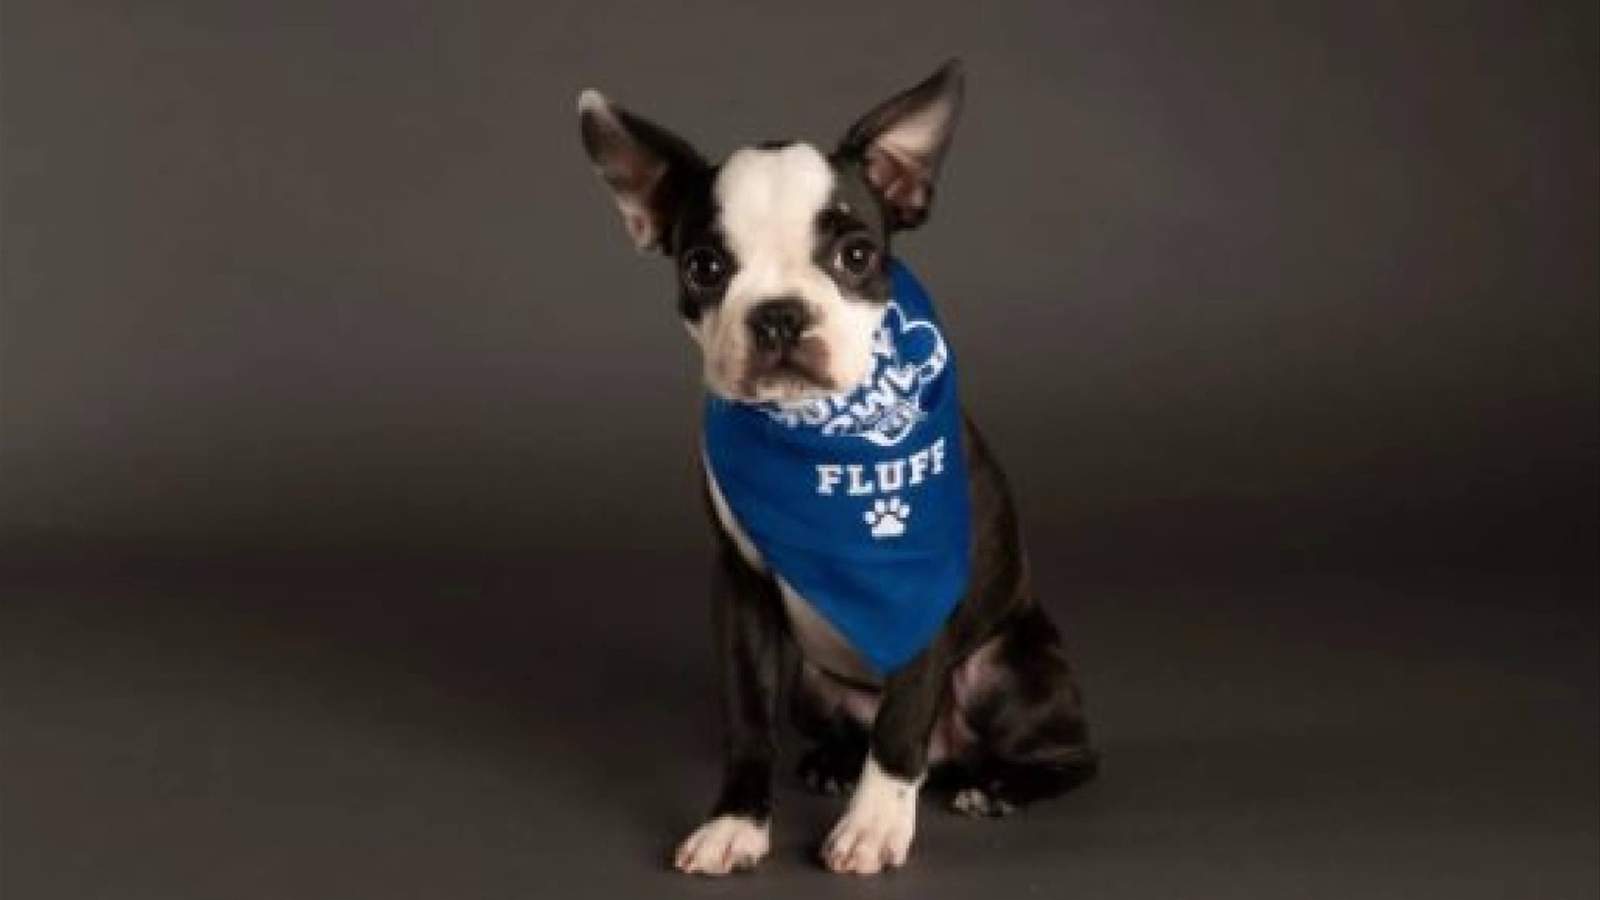 Salem puppy on Team Fluffs starting roster in the Puppy Bowl